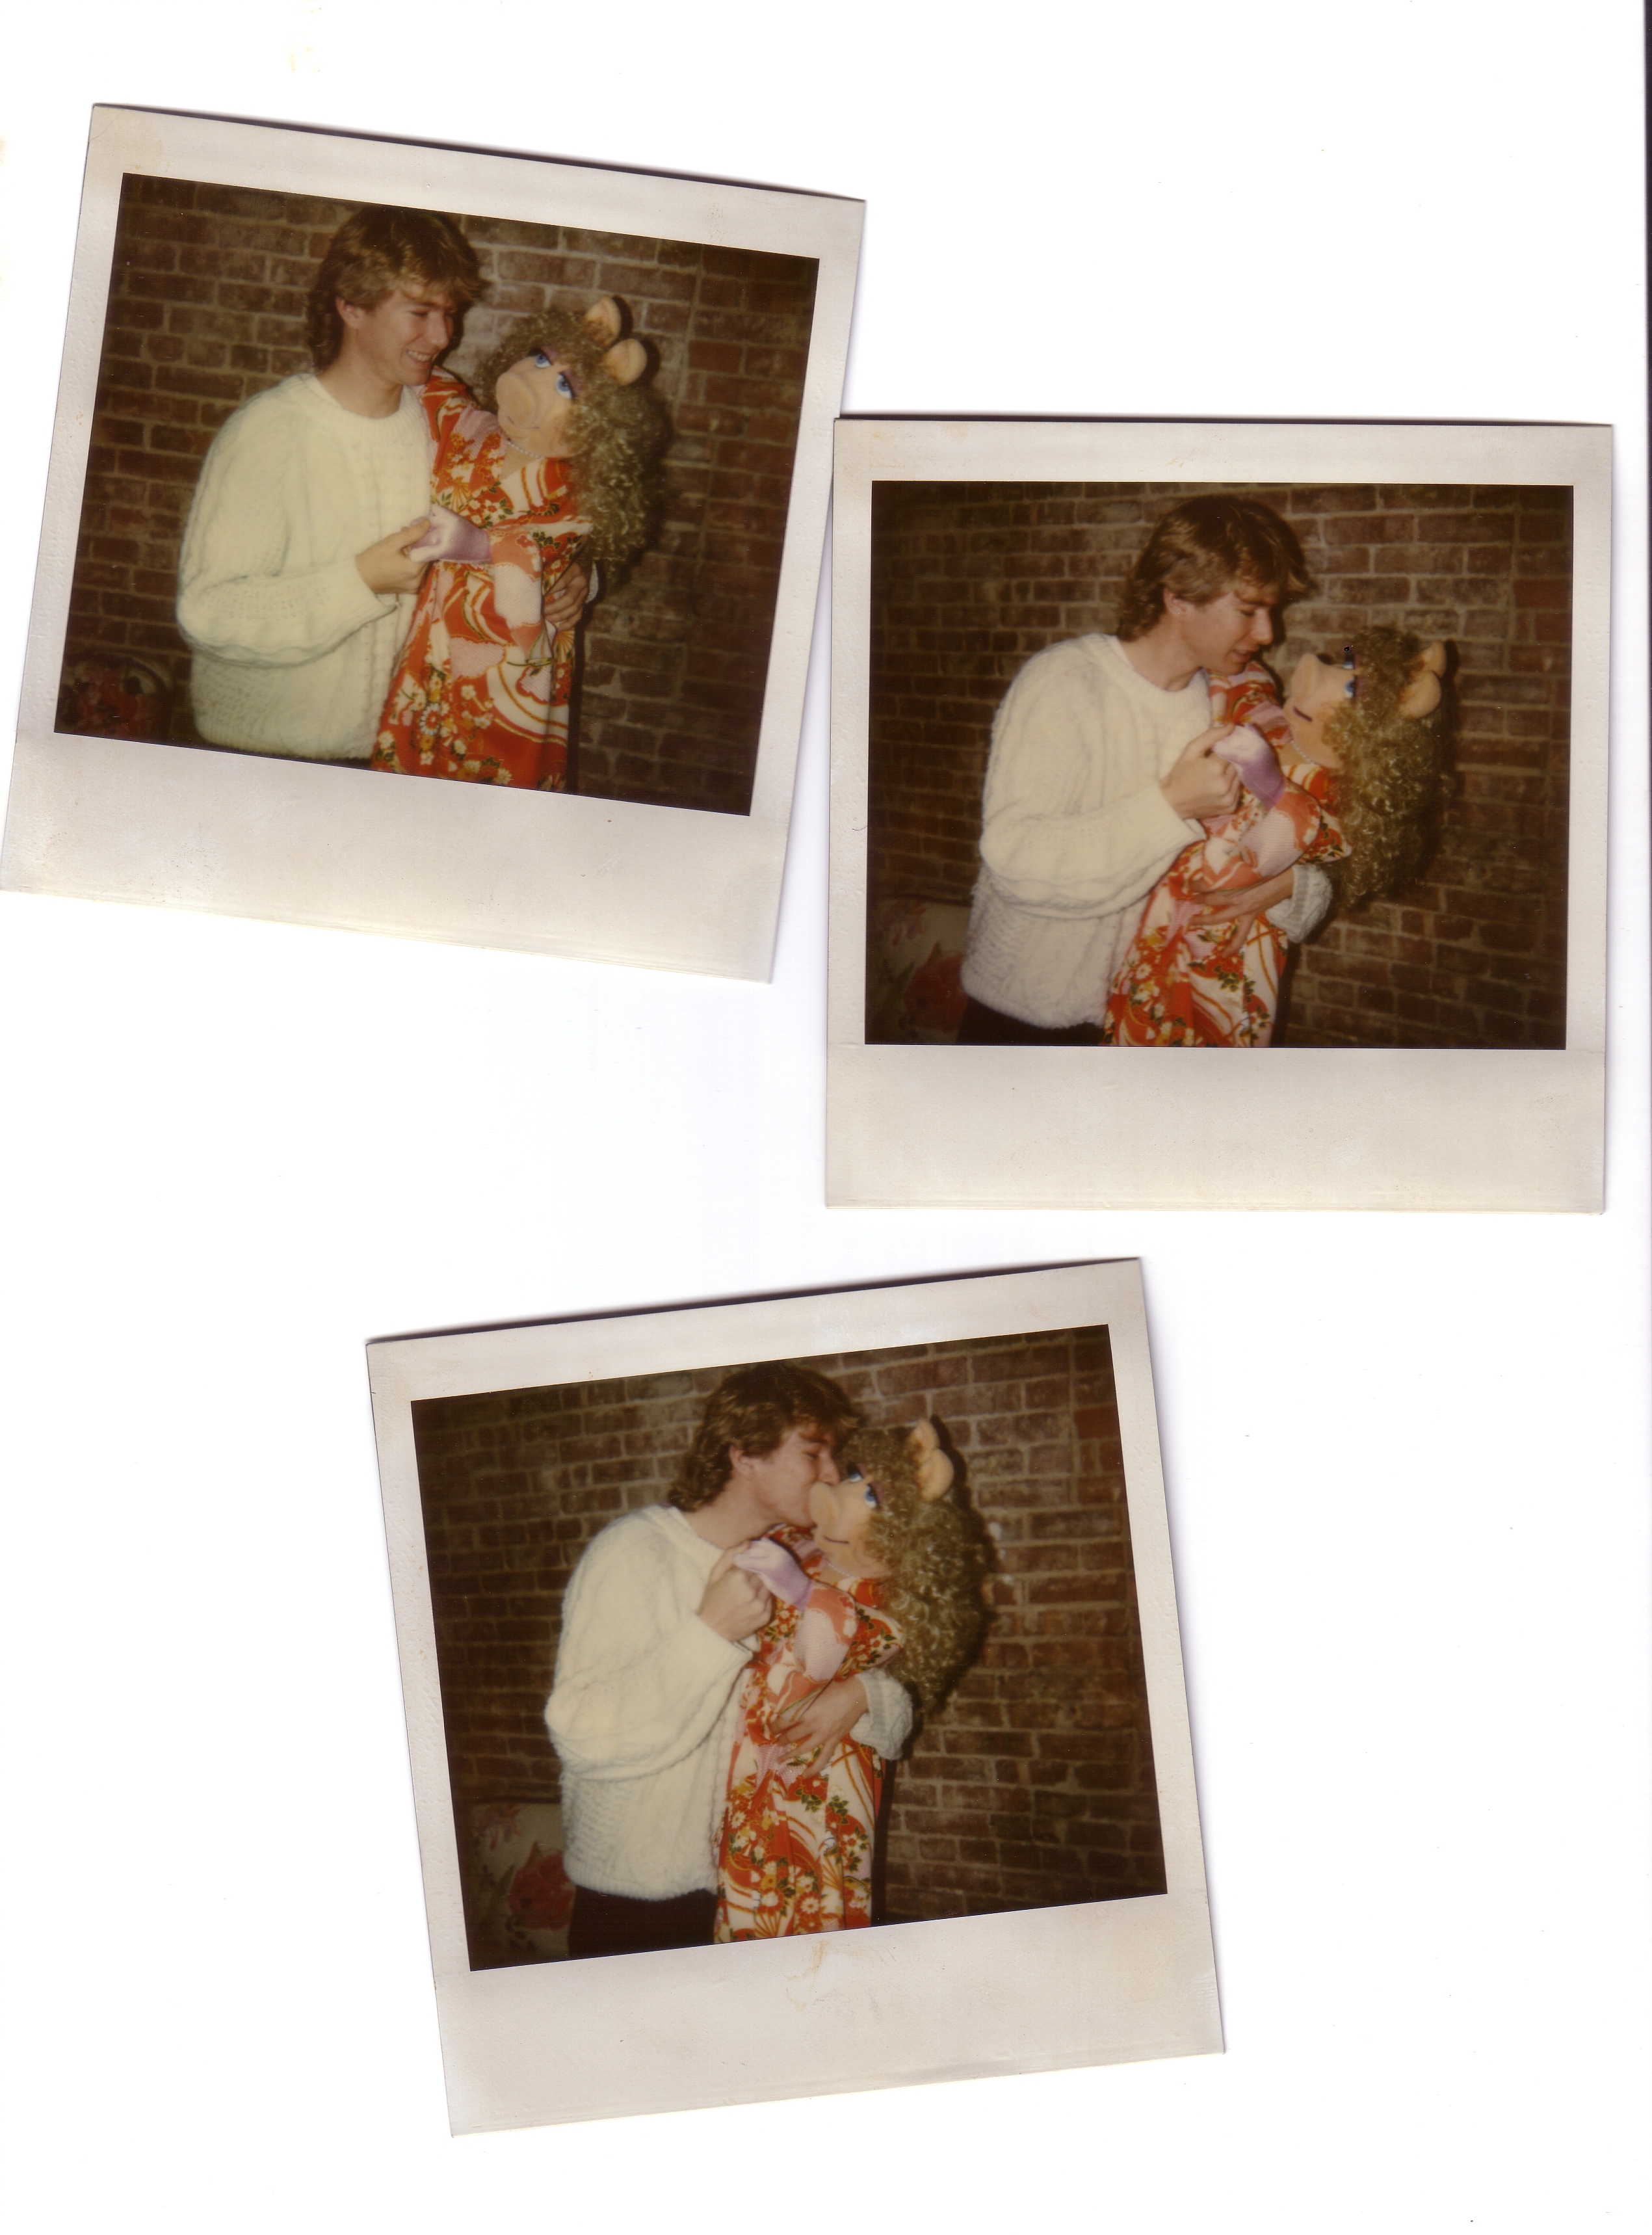 Håkon Noodt & Miss Piggy relationship at Jim Henson Company 1989